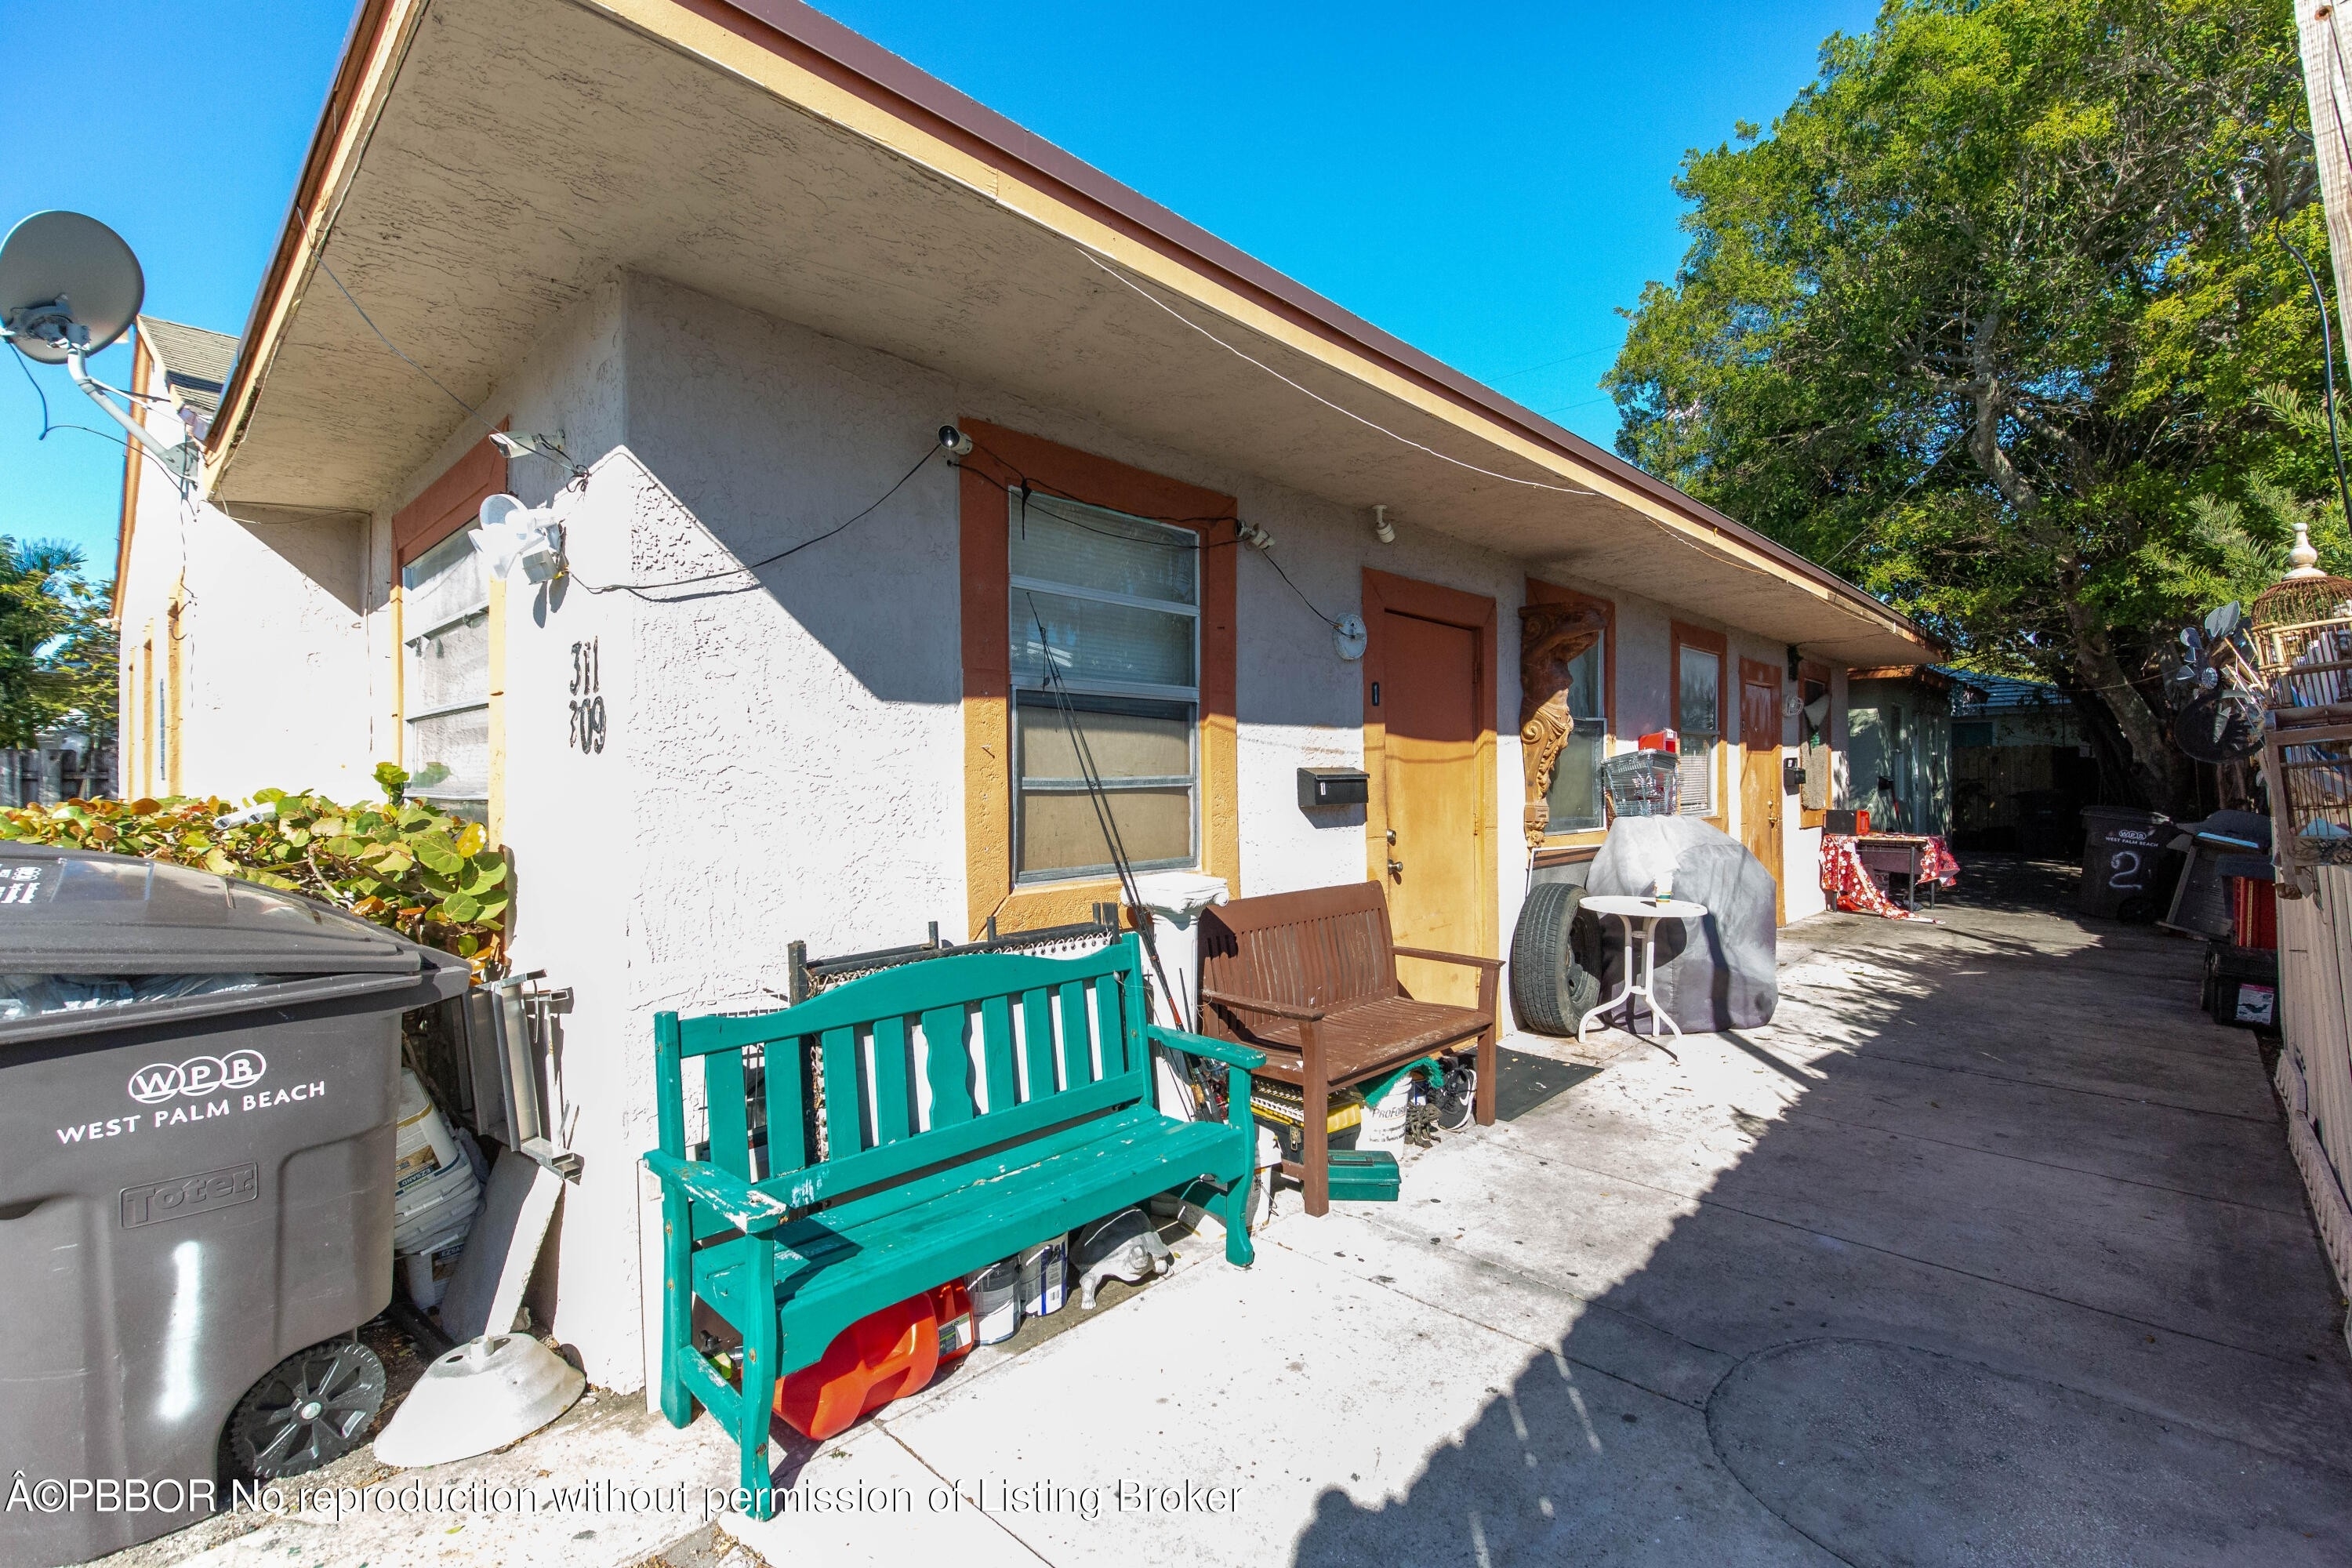 Property at Central Park, West Palm Beach, FL 33405